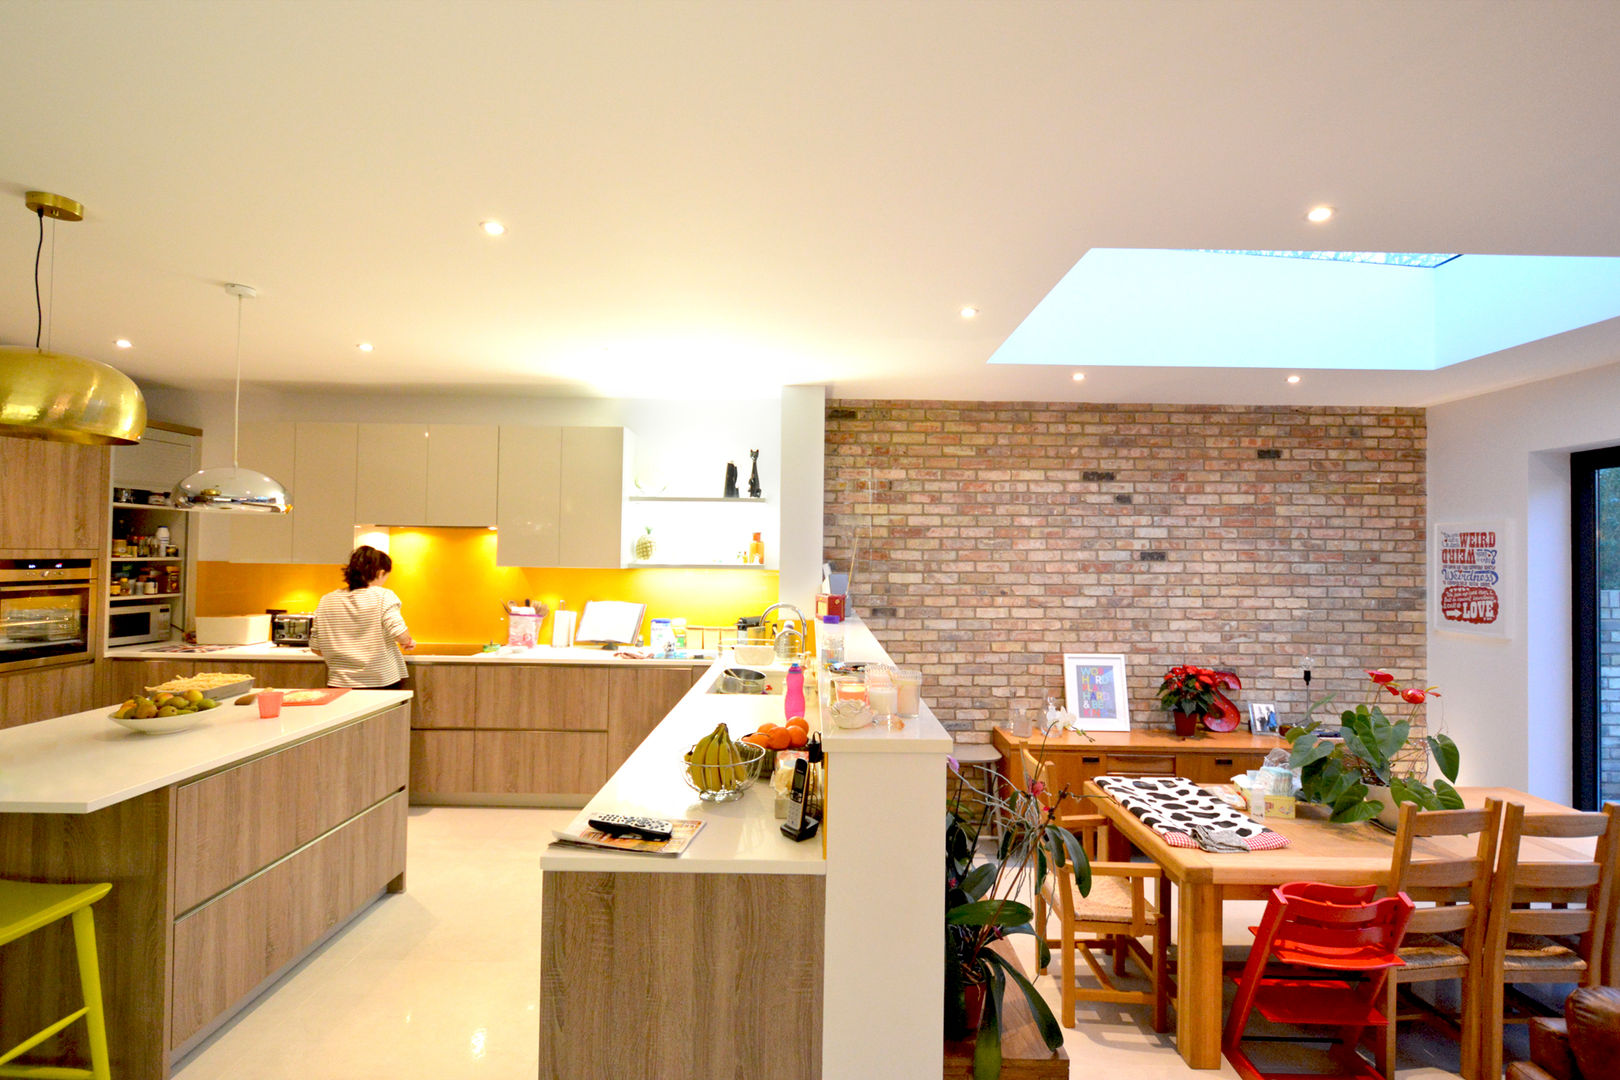 Grange Park, Enfield N21 | House extension GOAStudio London residential architecture limited ห้องครัว